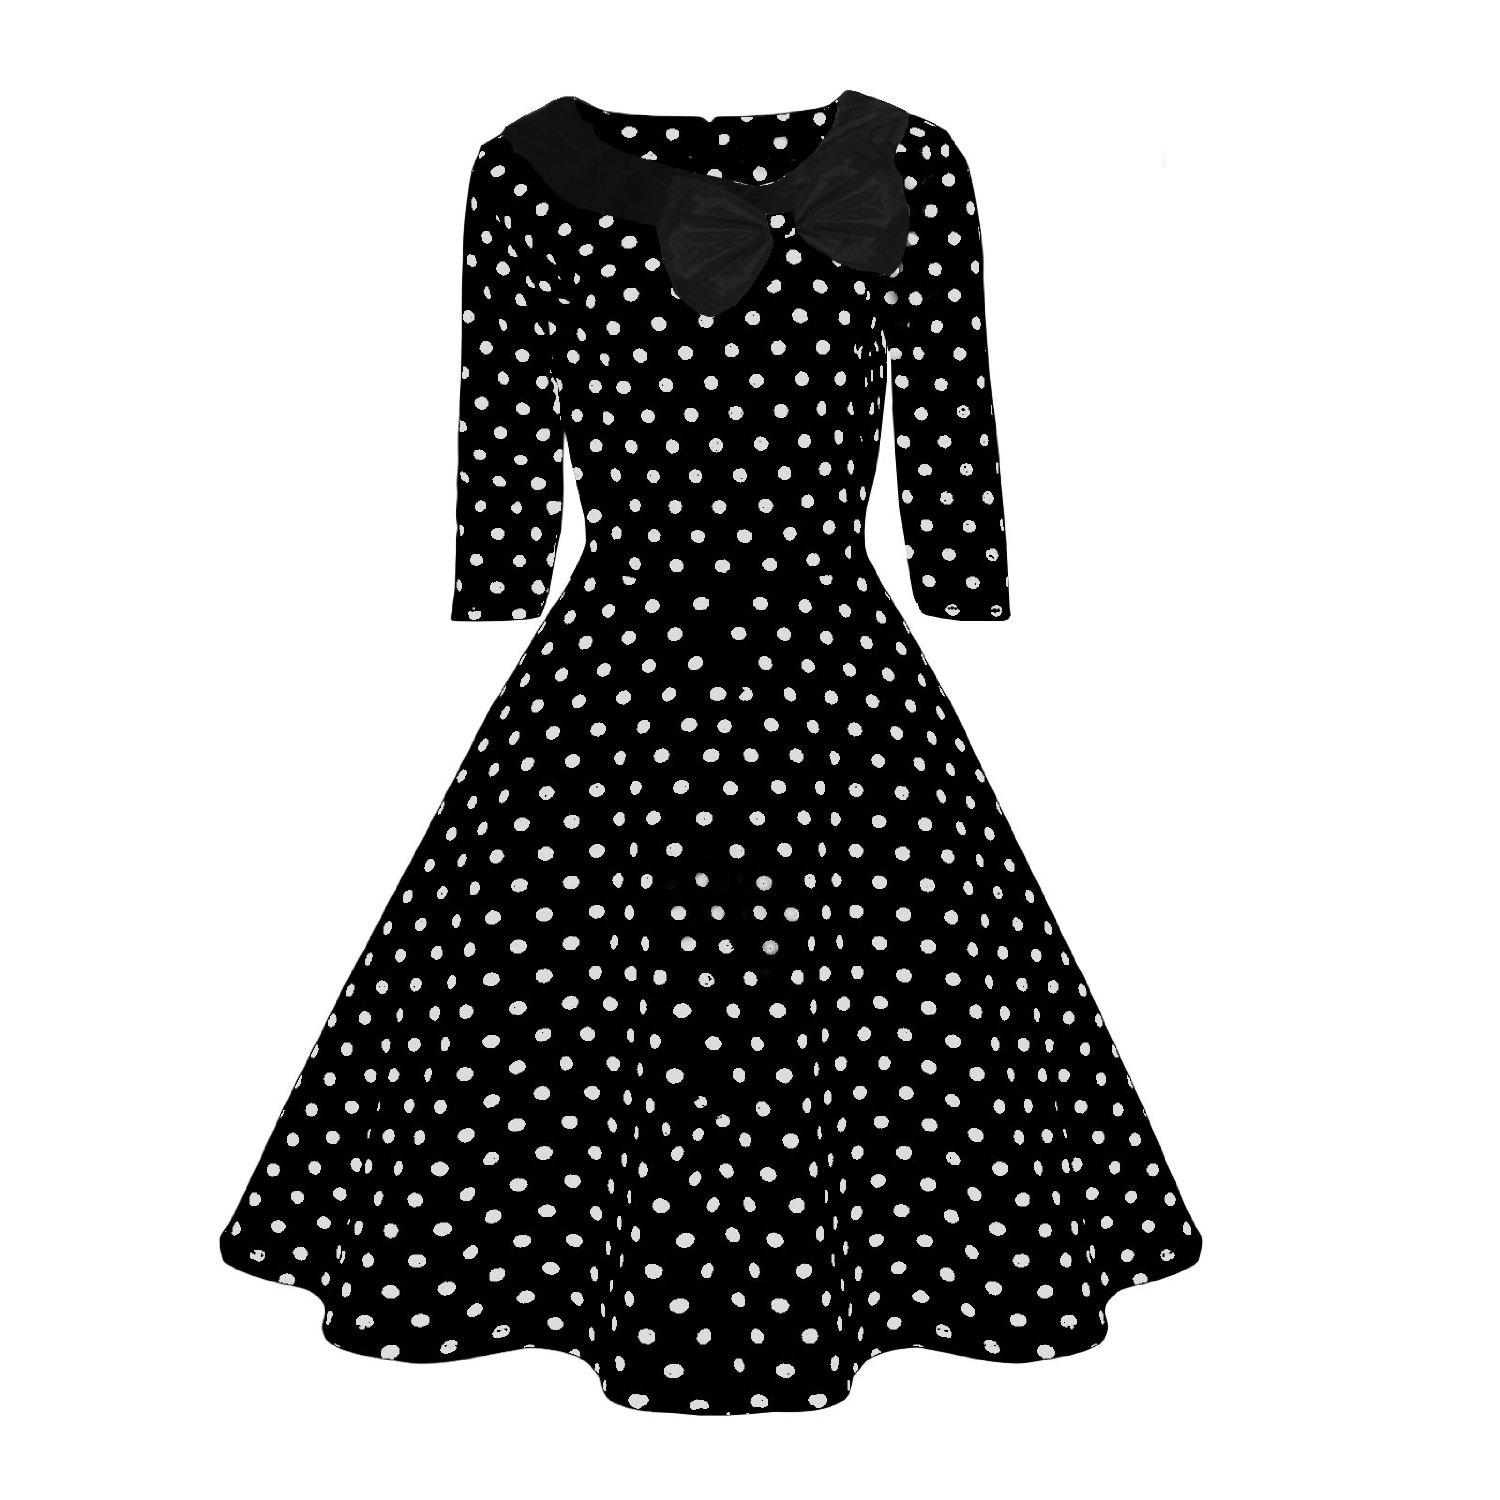 black and white polka dot dress